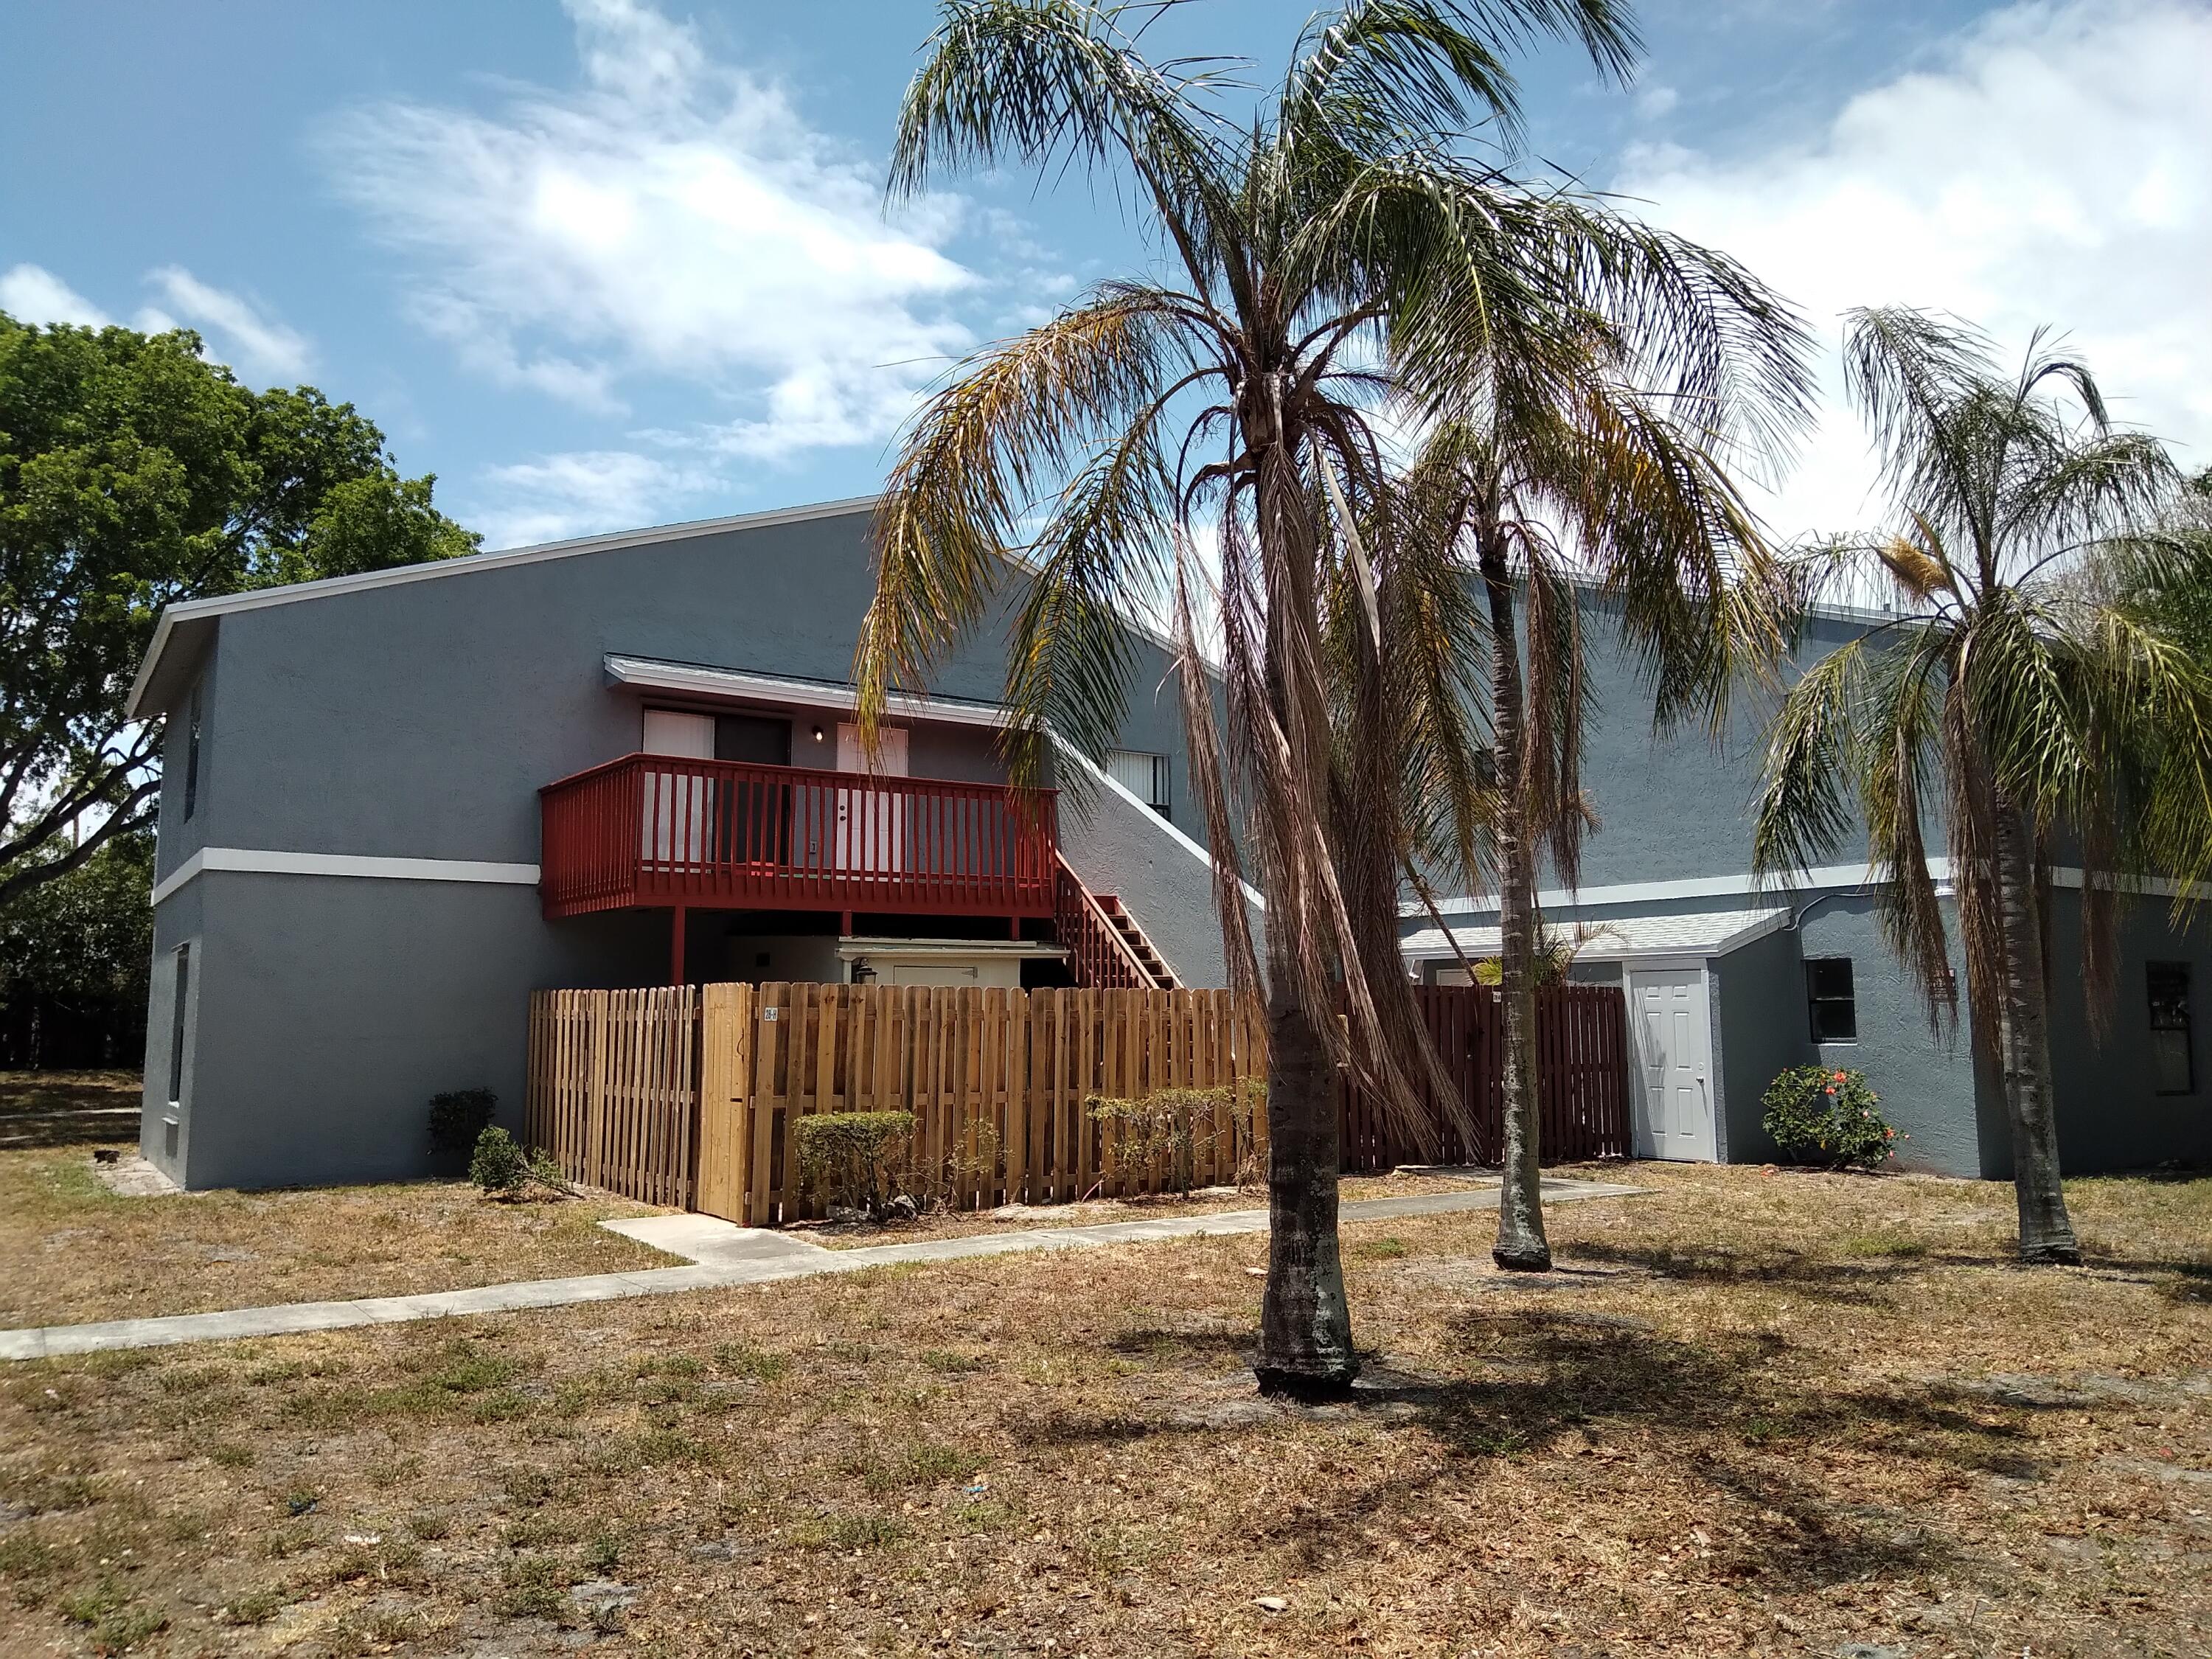 Property for Sale at 28 Crossings Circle F, Boynton Beach, Palm Beach County, Florida - Bedrooms: 2 
Bathrooms: 2  - $189,900